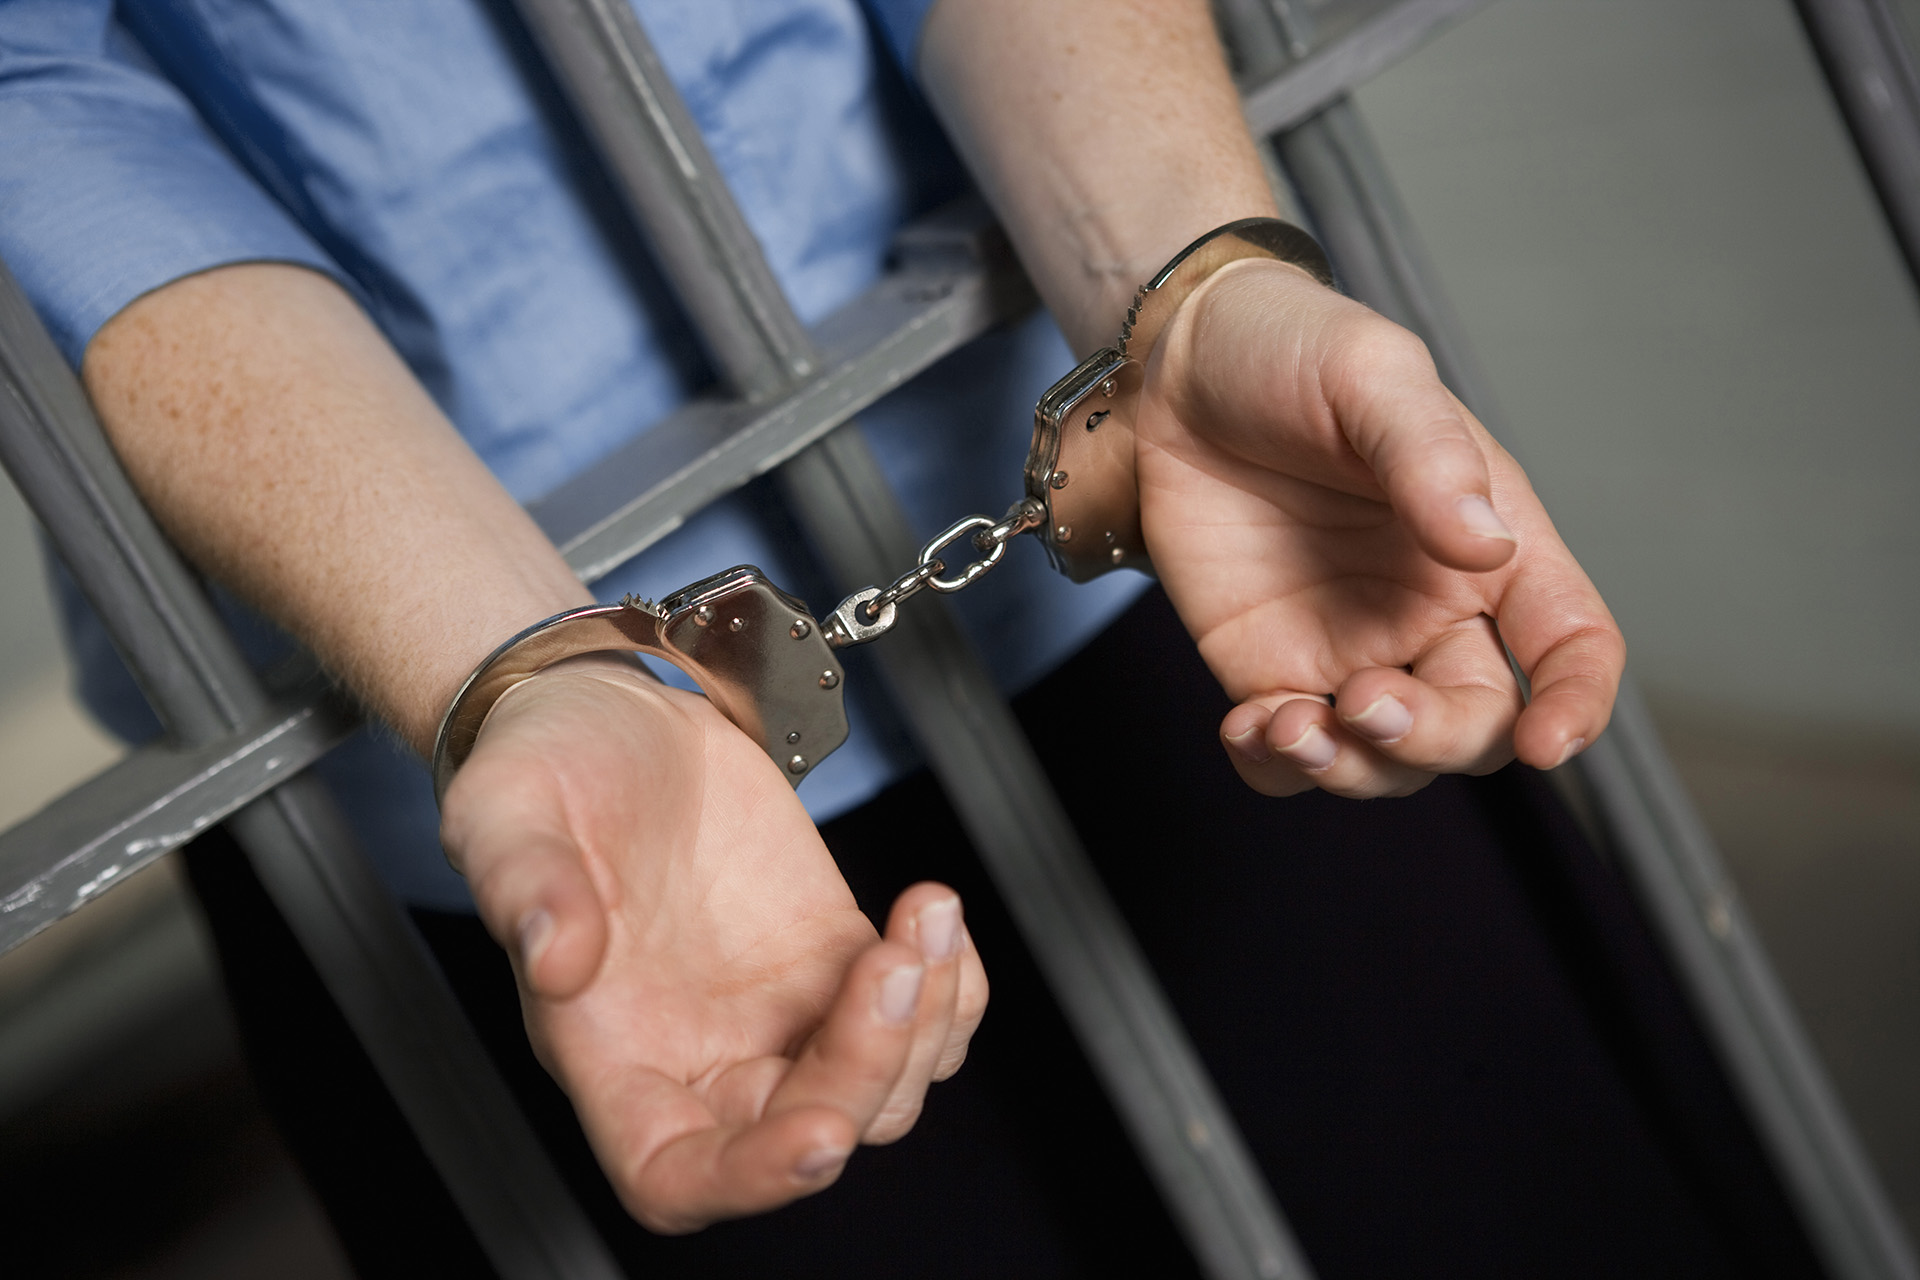 Man Handcuffed In Jail